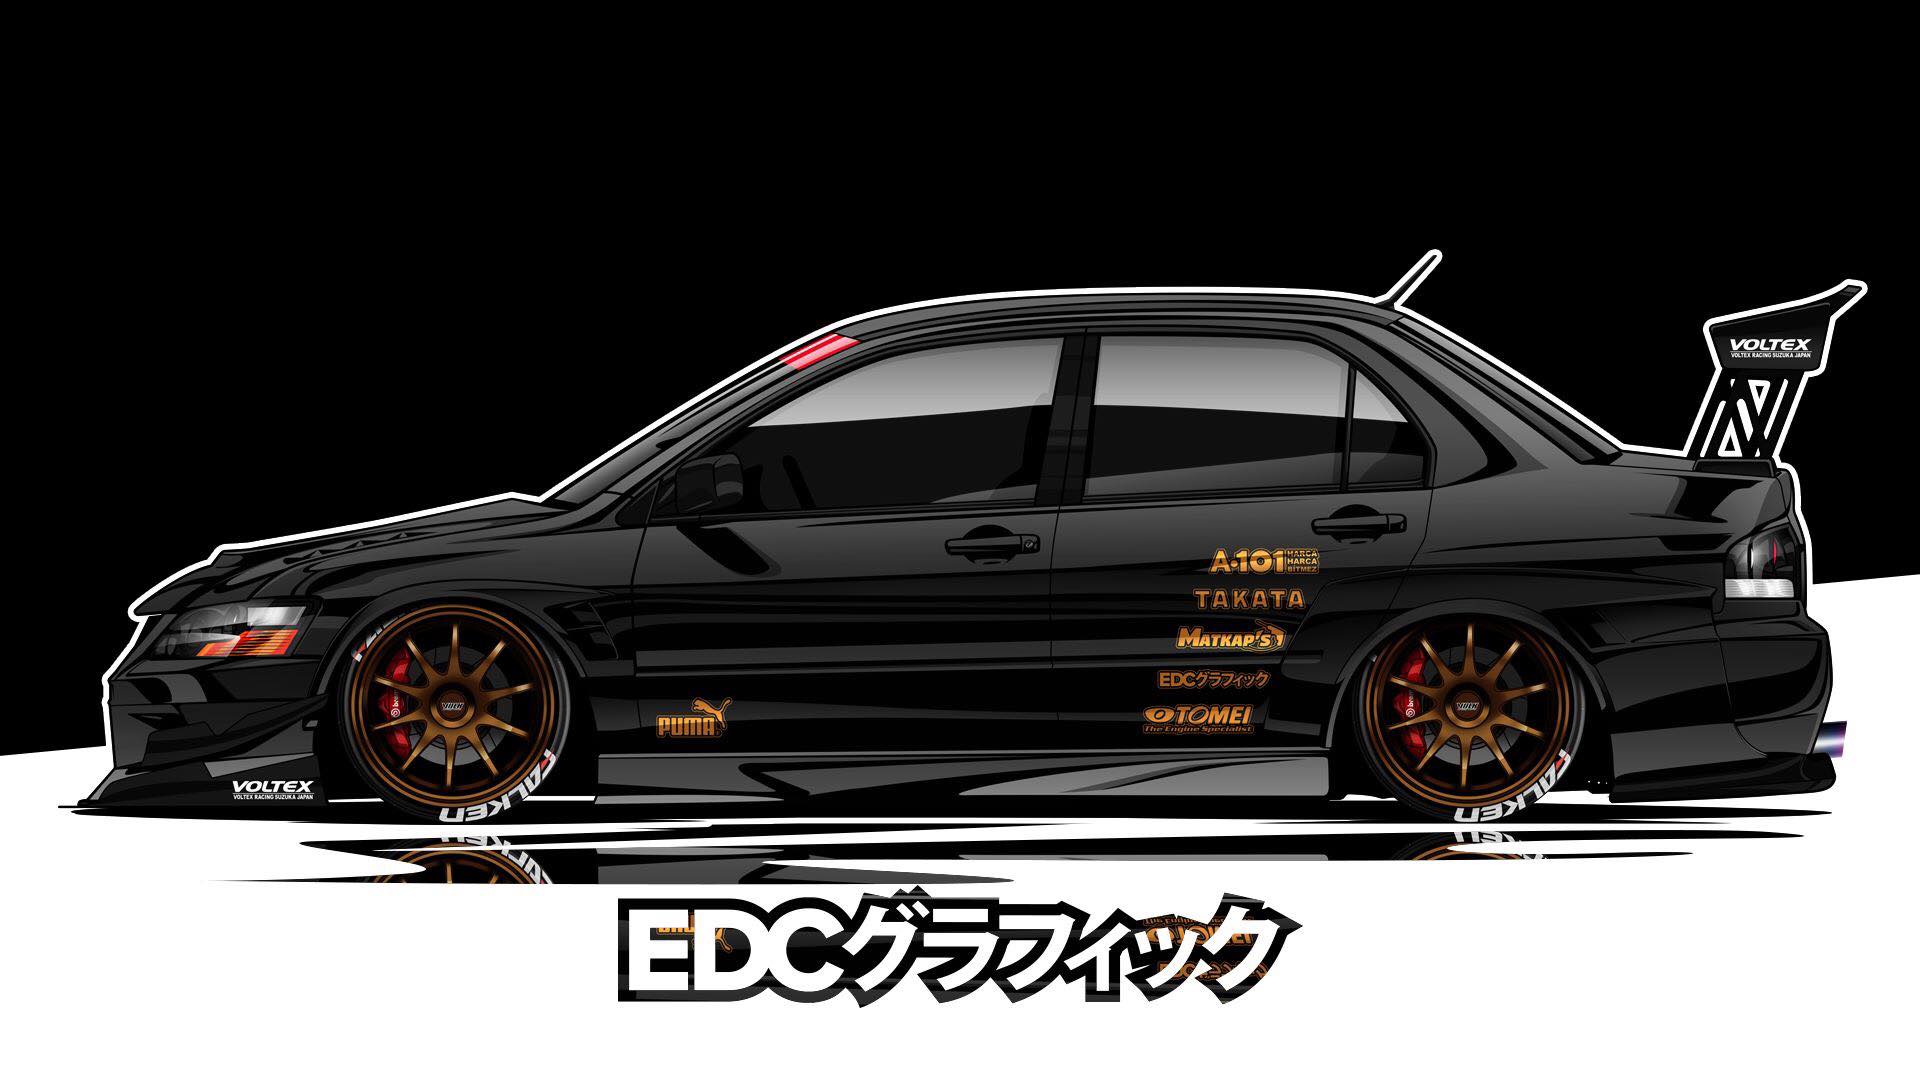 Wallpaper, EDC Graphics, Mitsubishi Lancer Evolution, JDM, render, car, artwork, black cars, vehicle 1920x1080